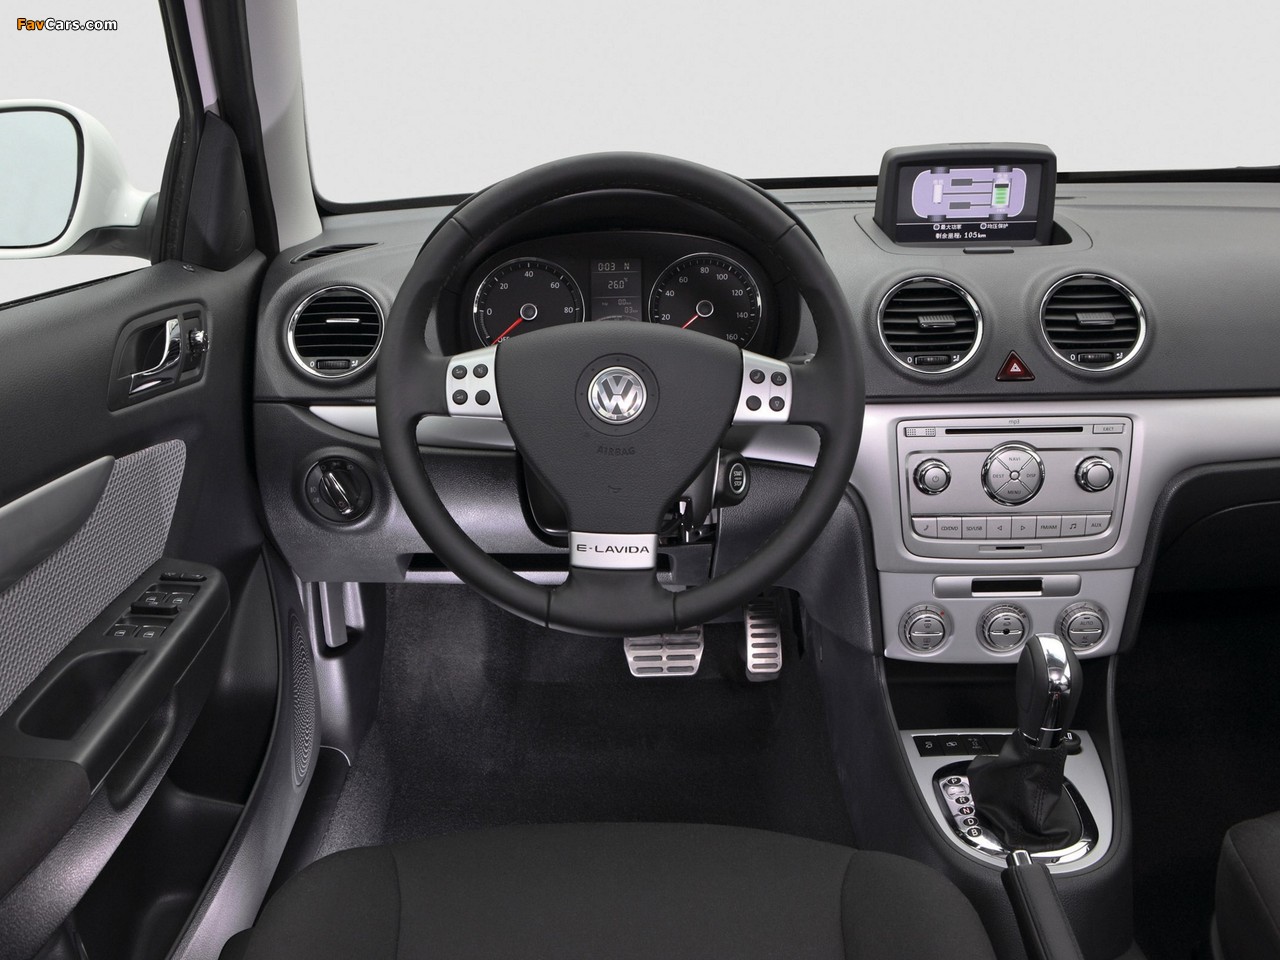 Volkswagen E-Lavida Concept 2010 images (1280 x 960)